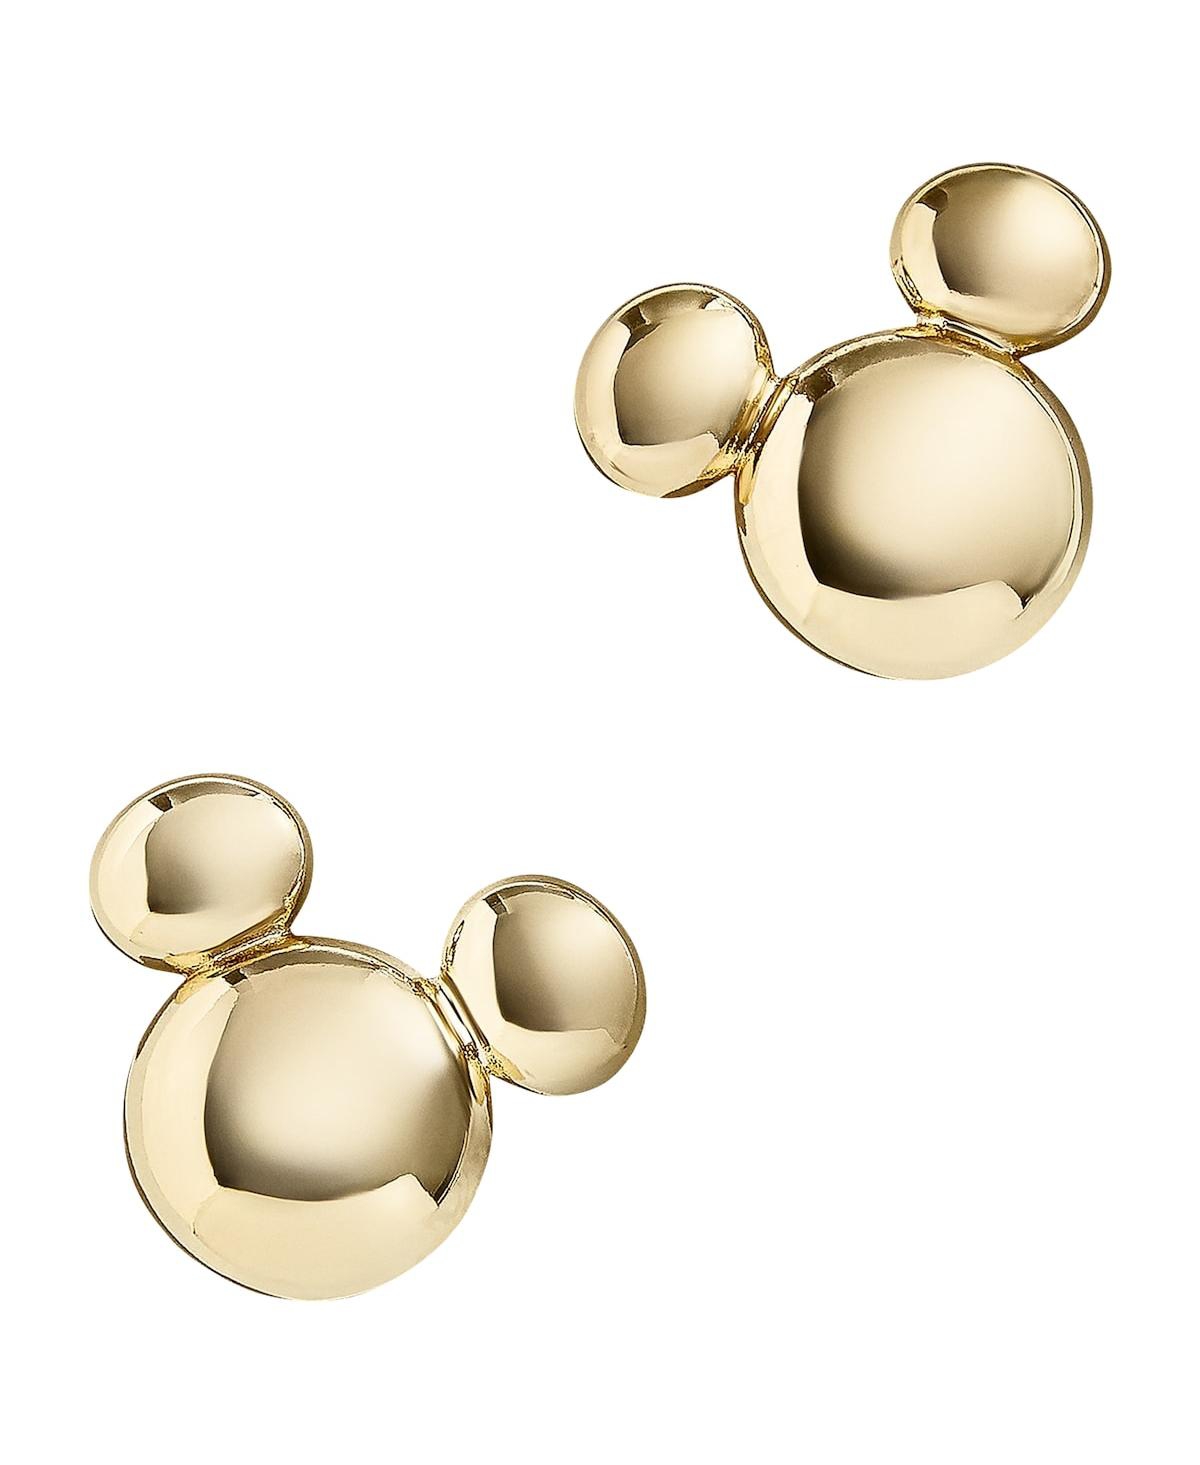 Mickey Mouse Head Earrings - Gold